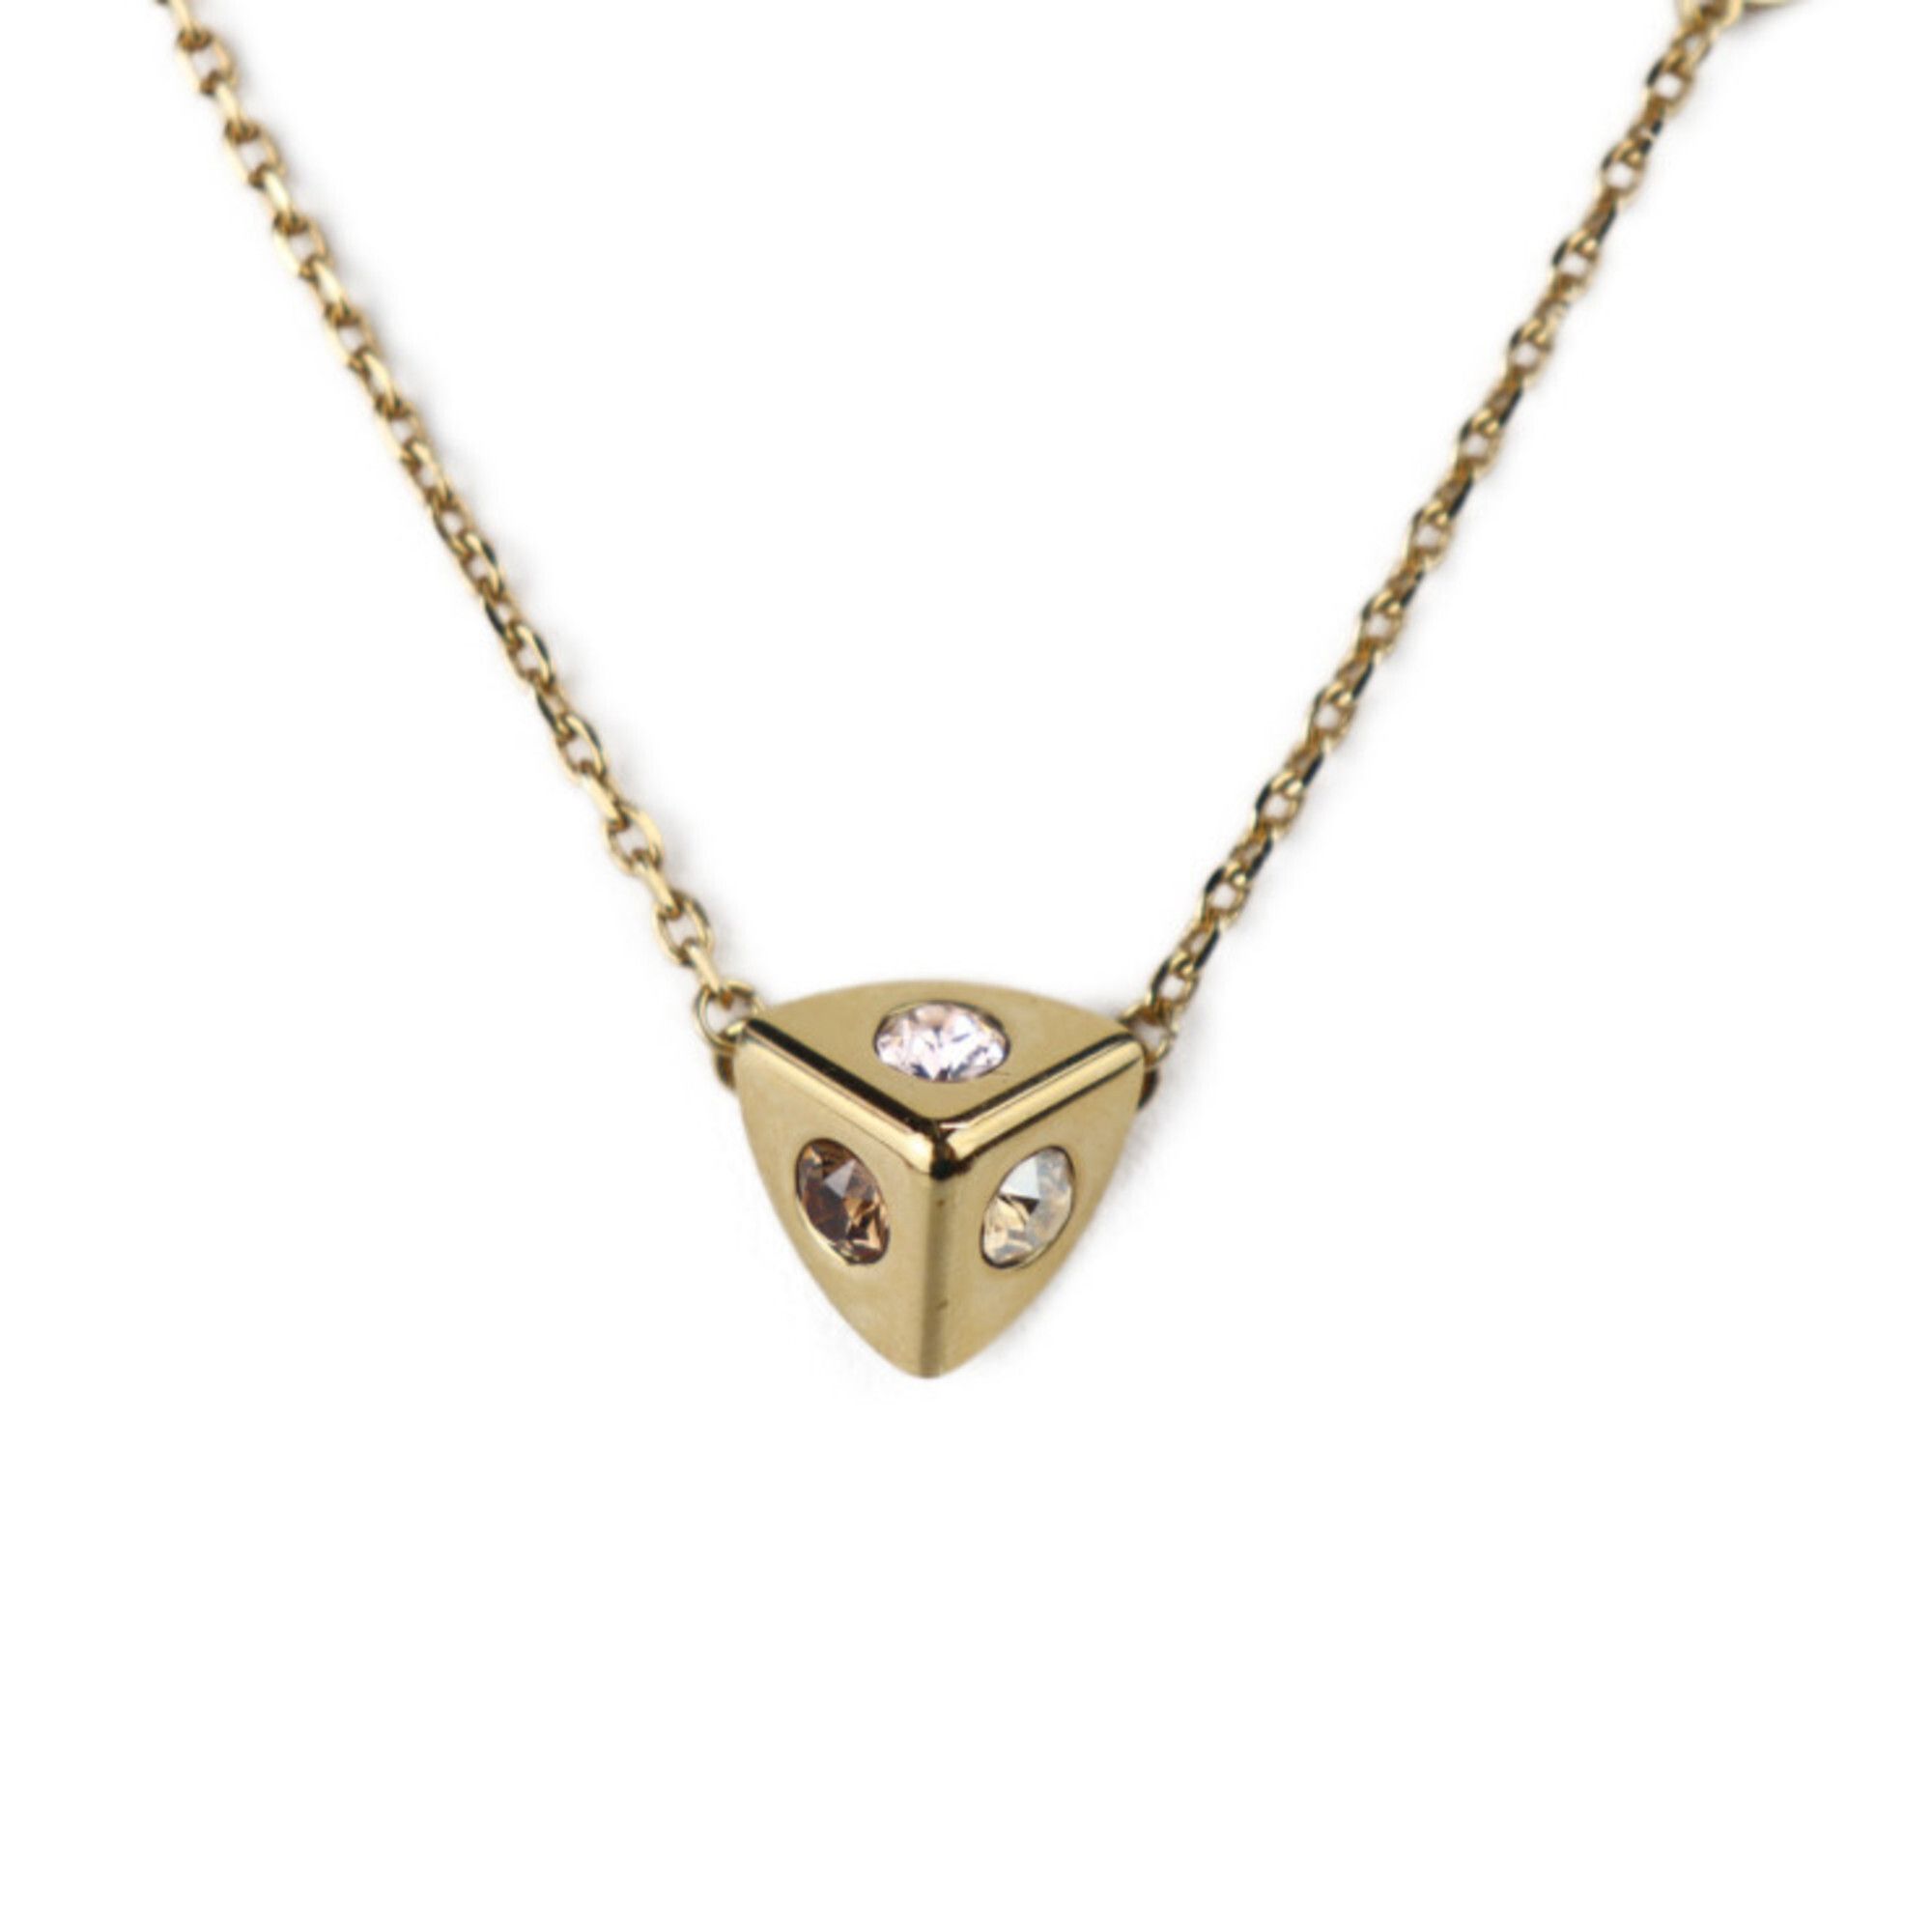 Louis Vuitton Pendentif Monogram Idylle Q93281 Pink Gold (18K) Diamond  Women's Fashion Pendant Necklace (Pink Gold)